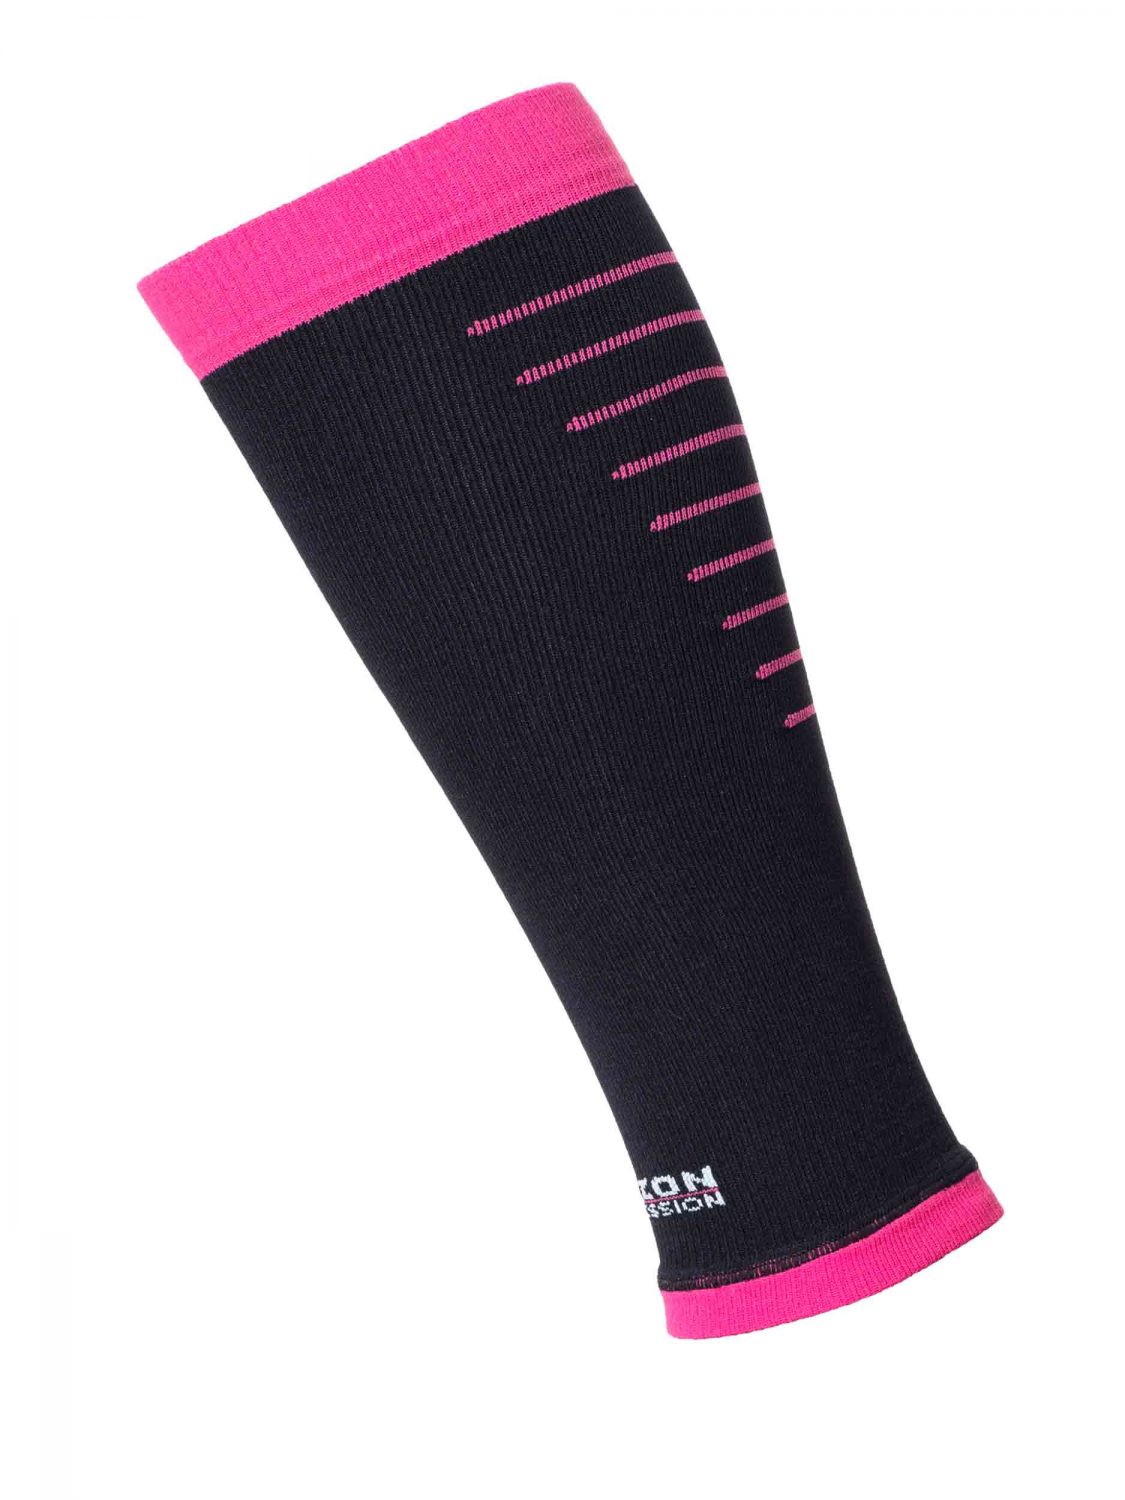 Horizon Performance Compression Calf Sleeve Sock Black Cerise